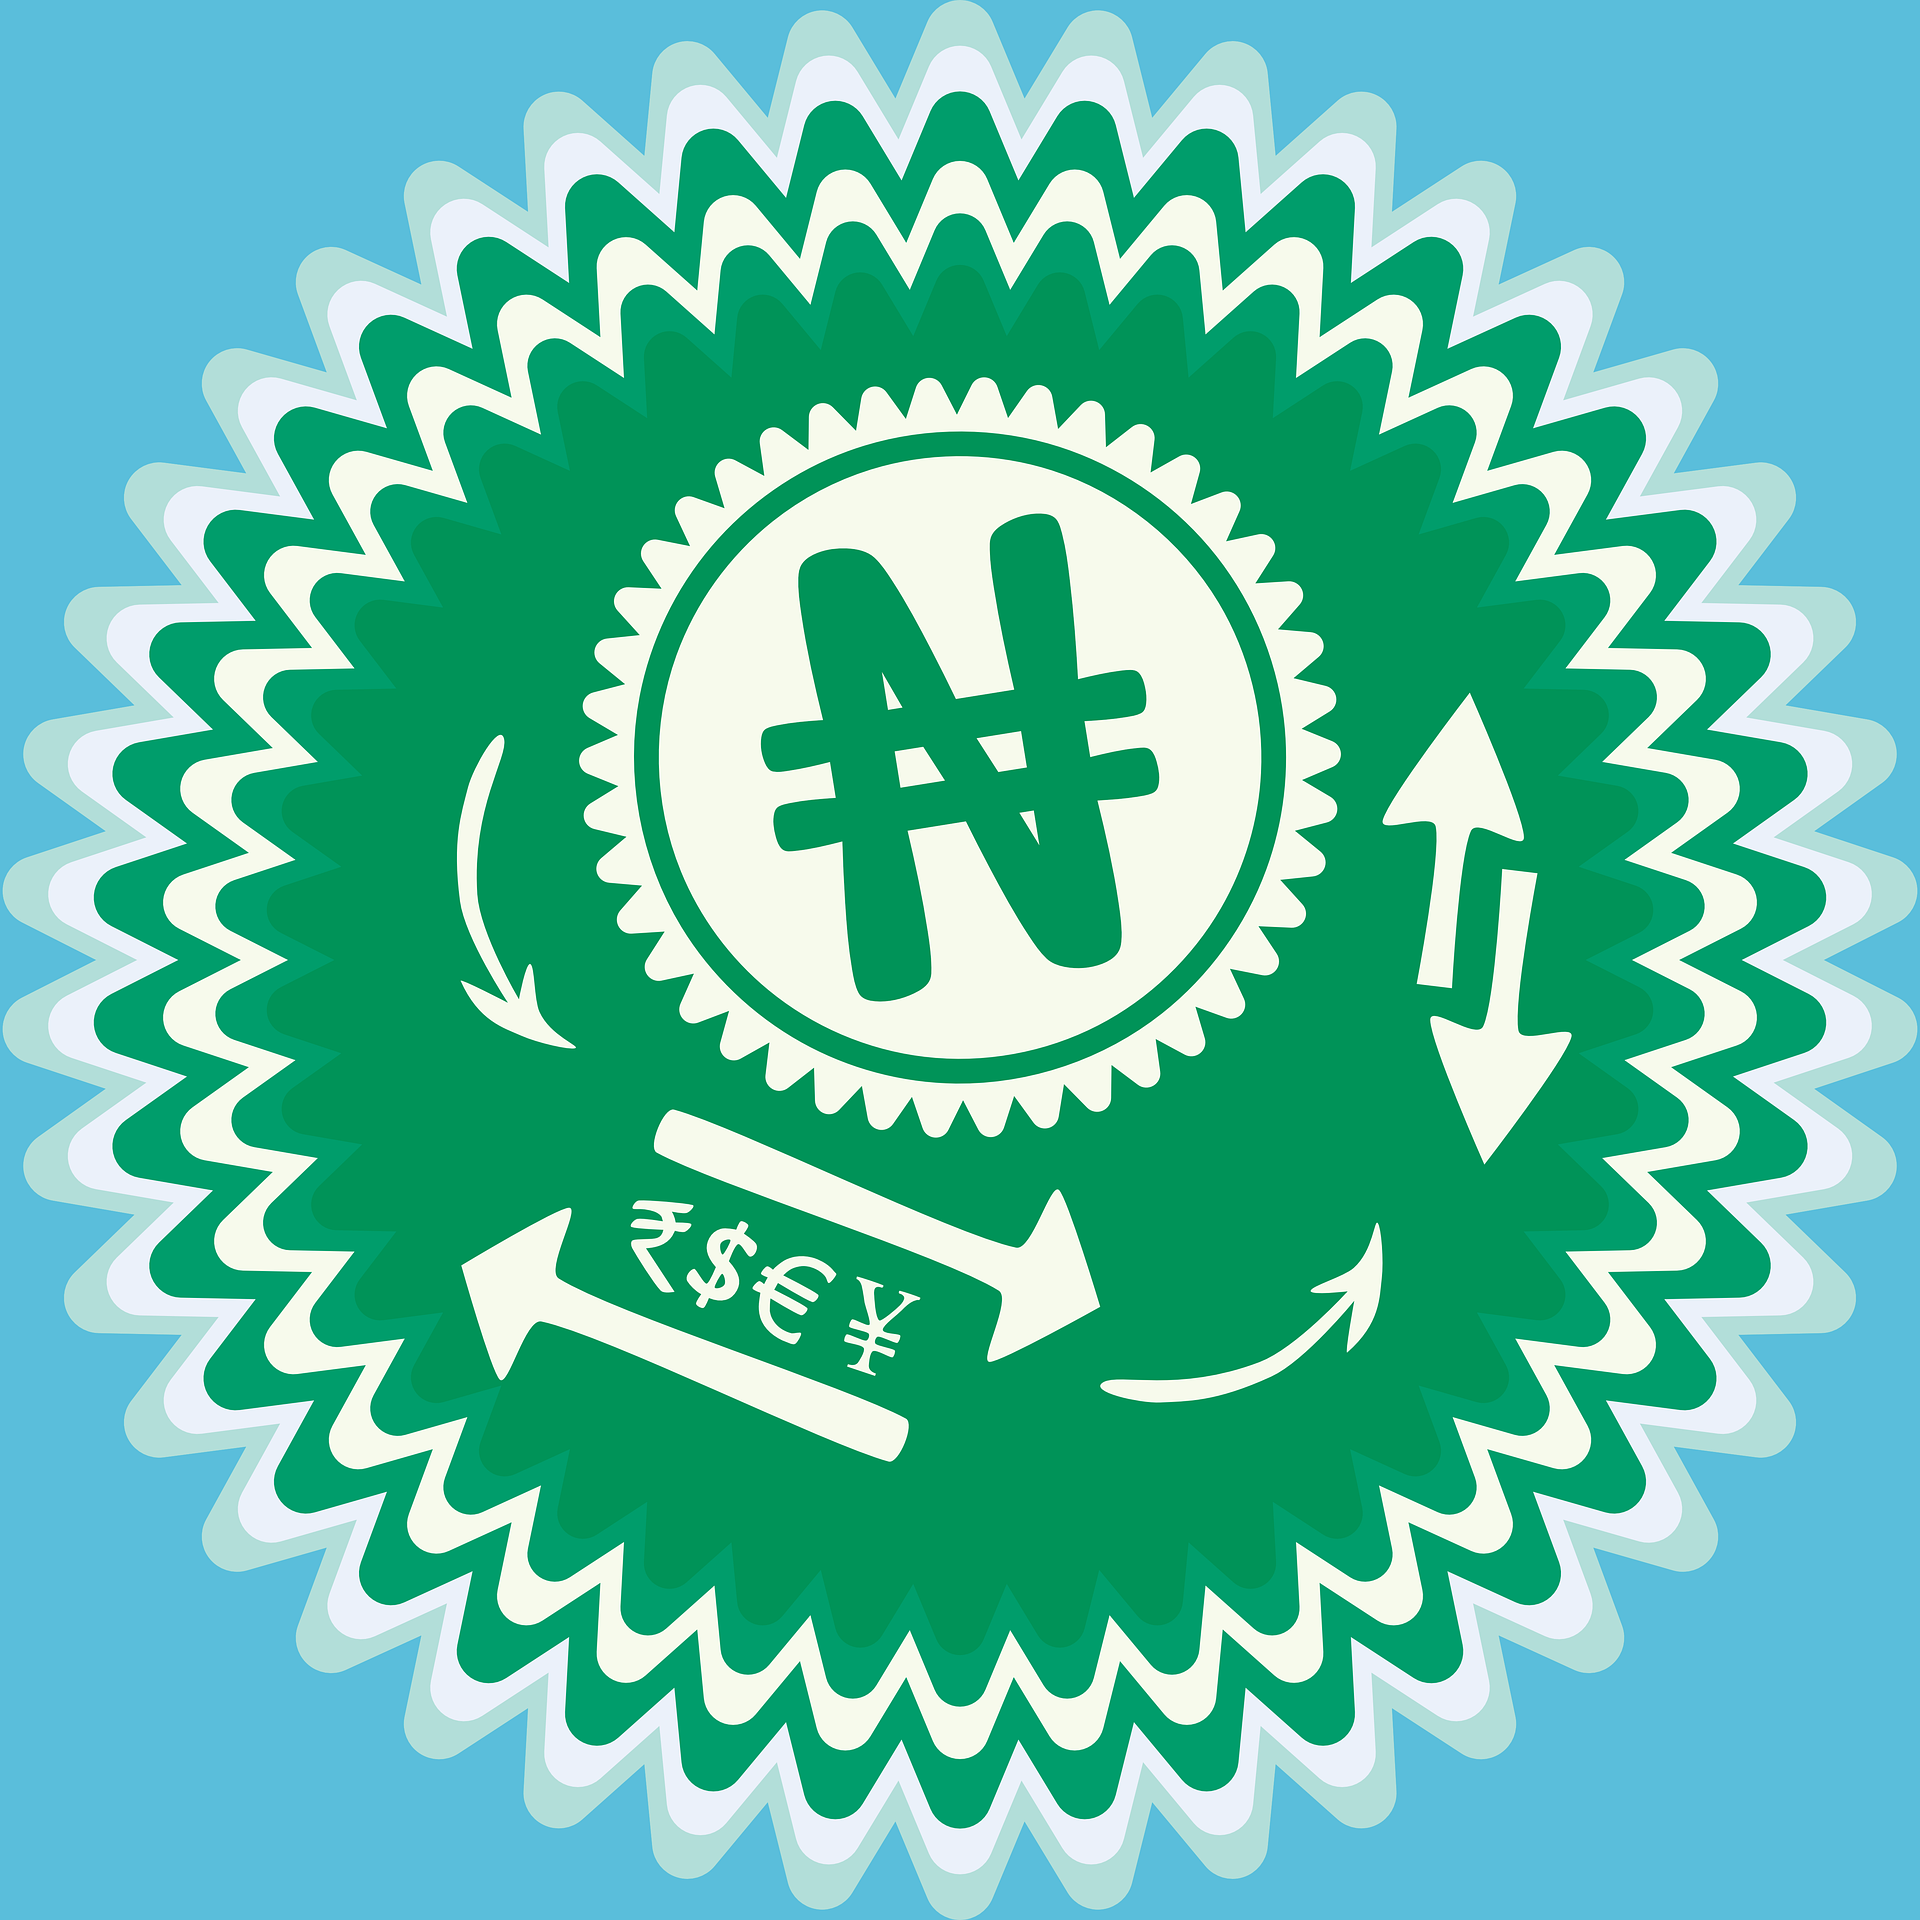 Nigeria exchange symbol